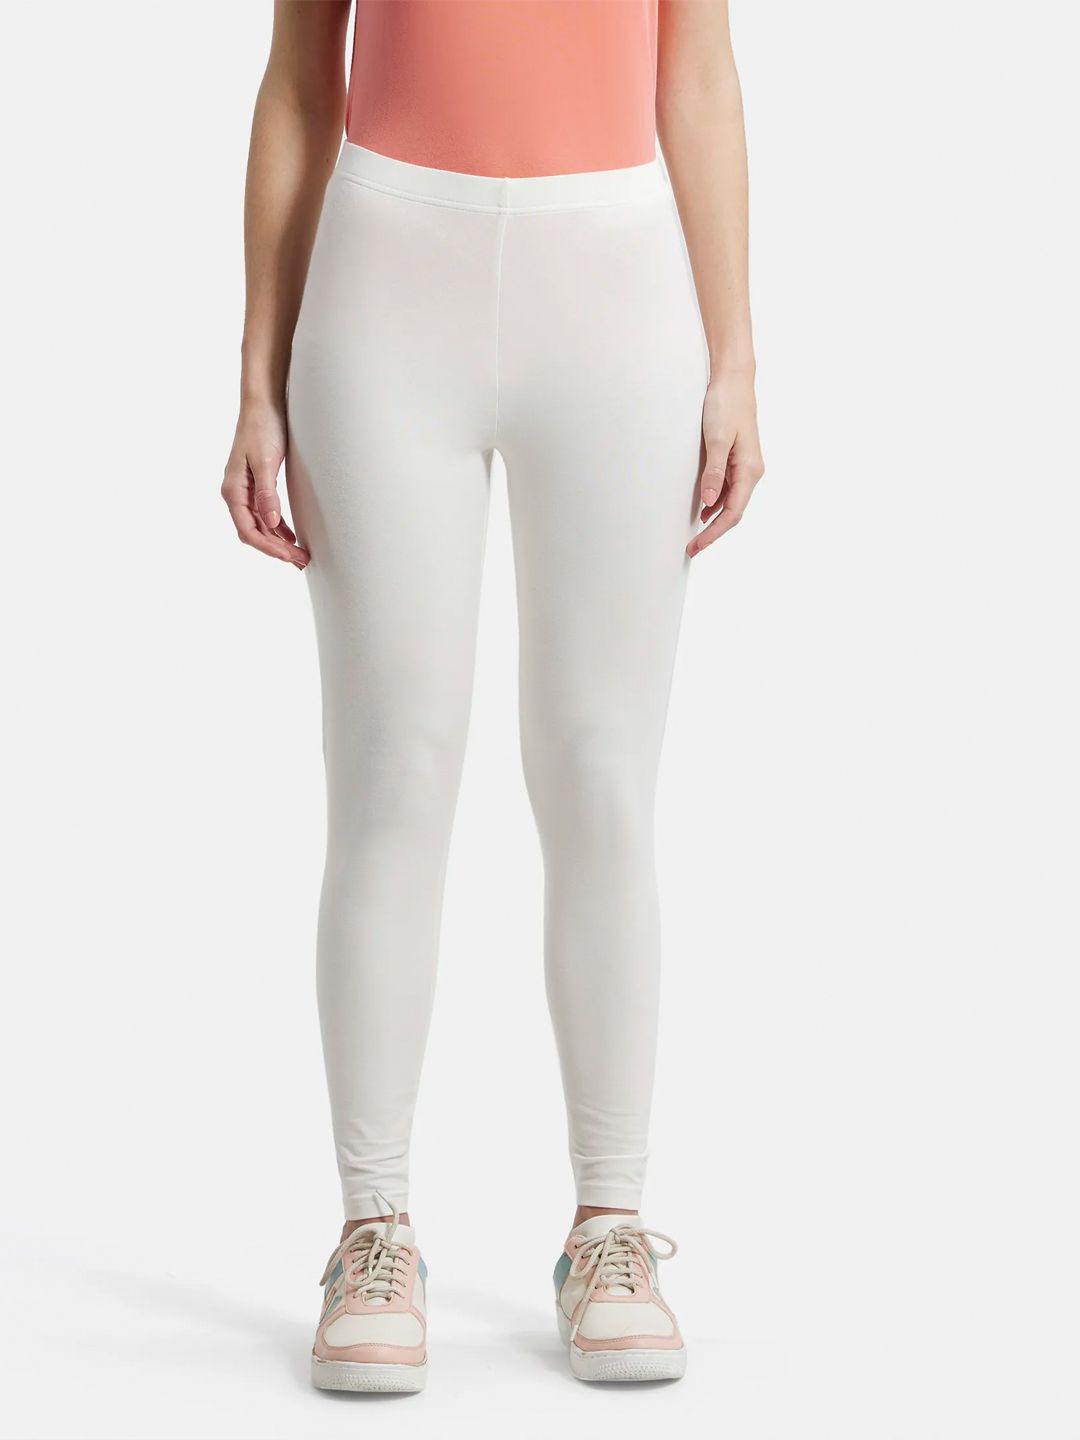 jockey-women-white-solid-slim-fit-cotton-ankle-length-leggings